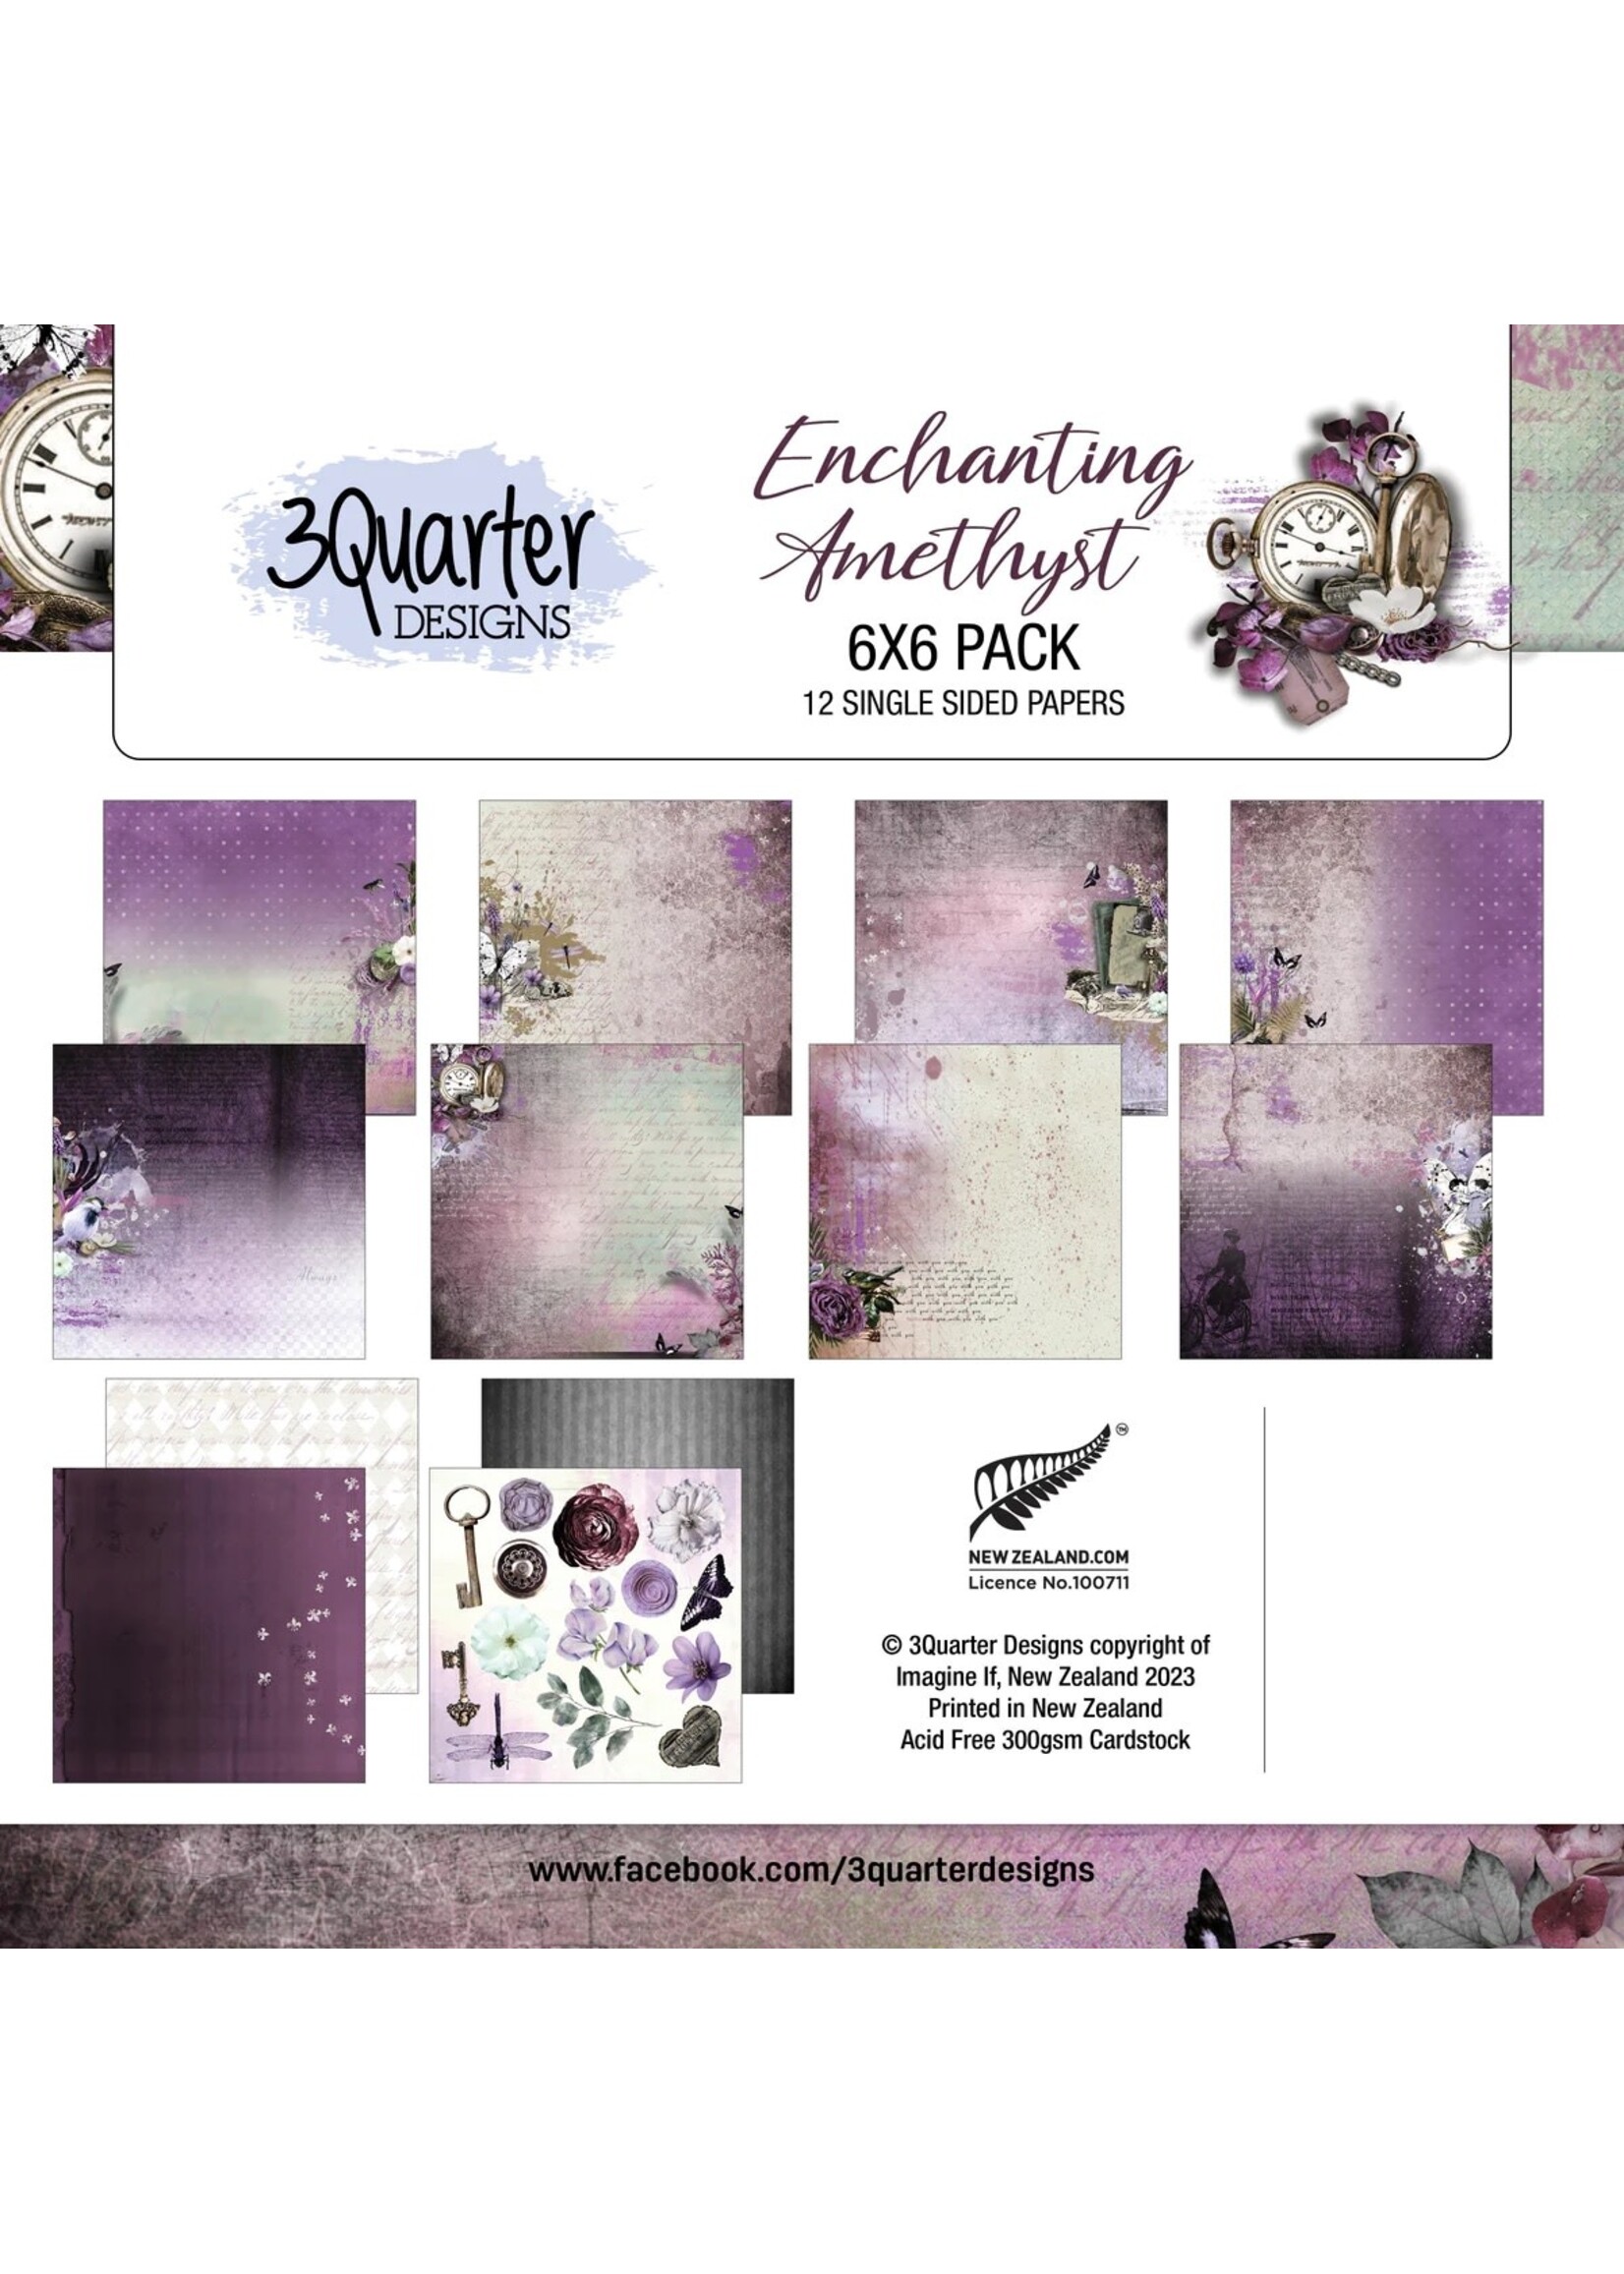 3Quarter Designs Enchanted Amethyst 6x6 Paper Pad